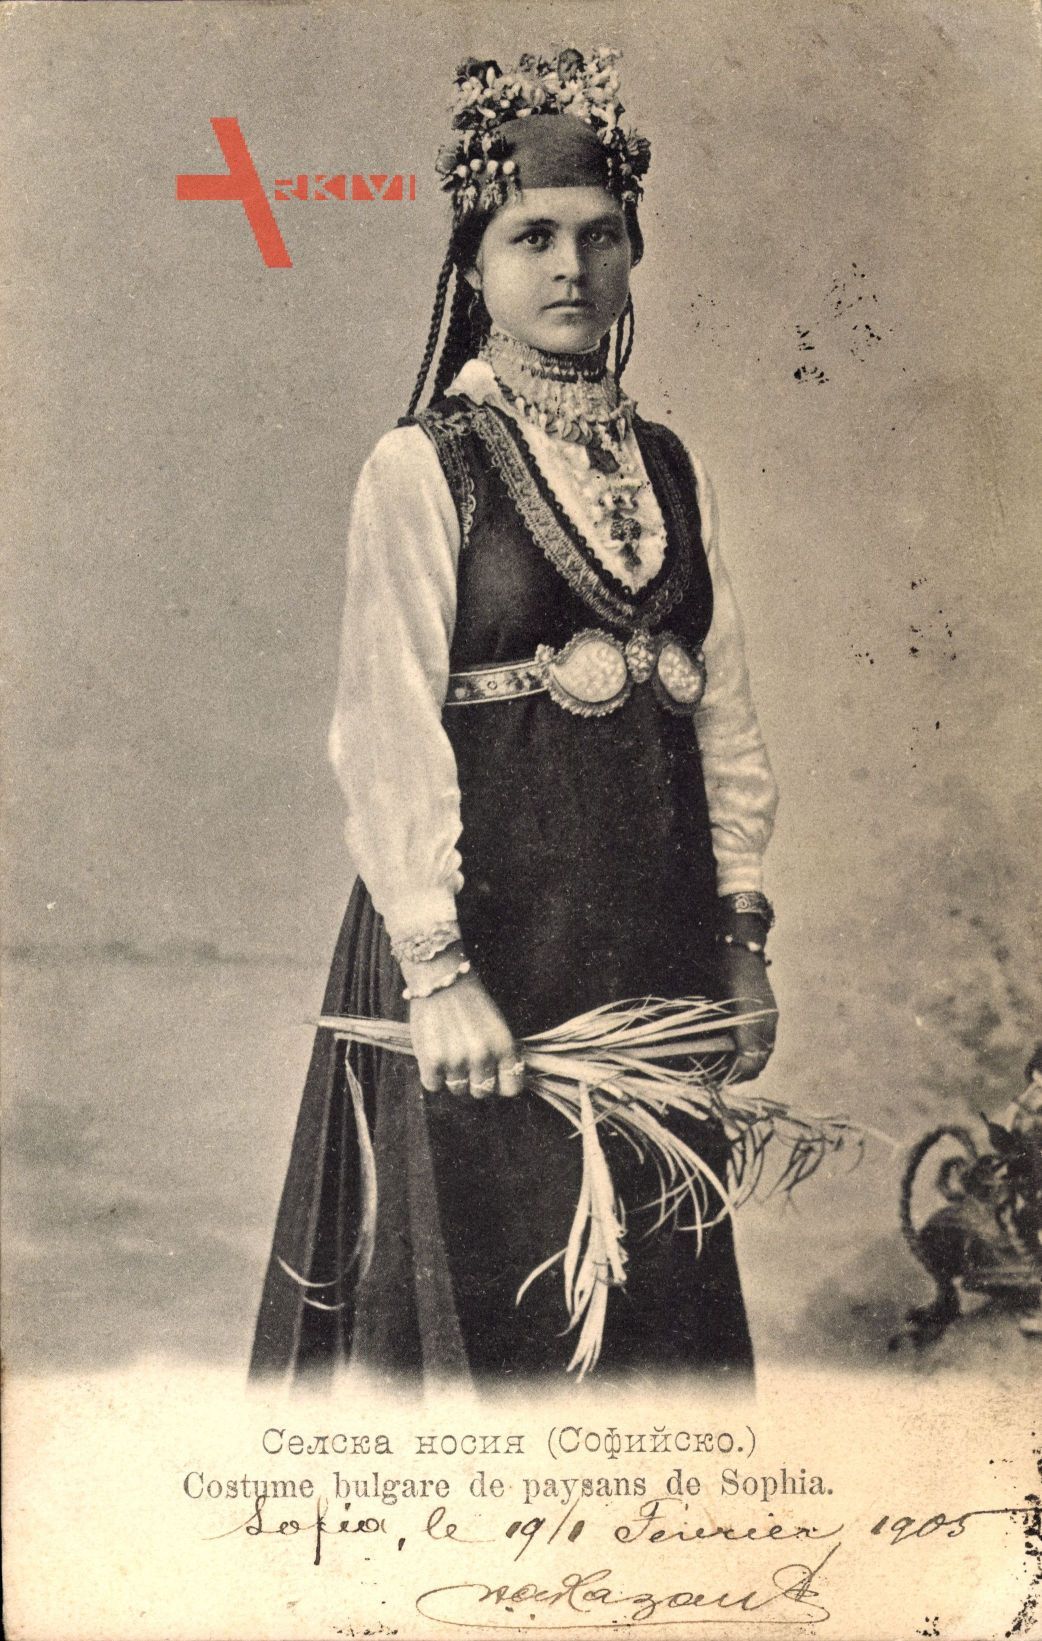 Costume bulgare de paysans de Sophia, Bulgarin in Tracht